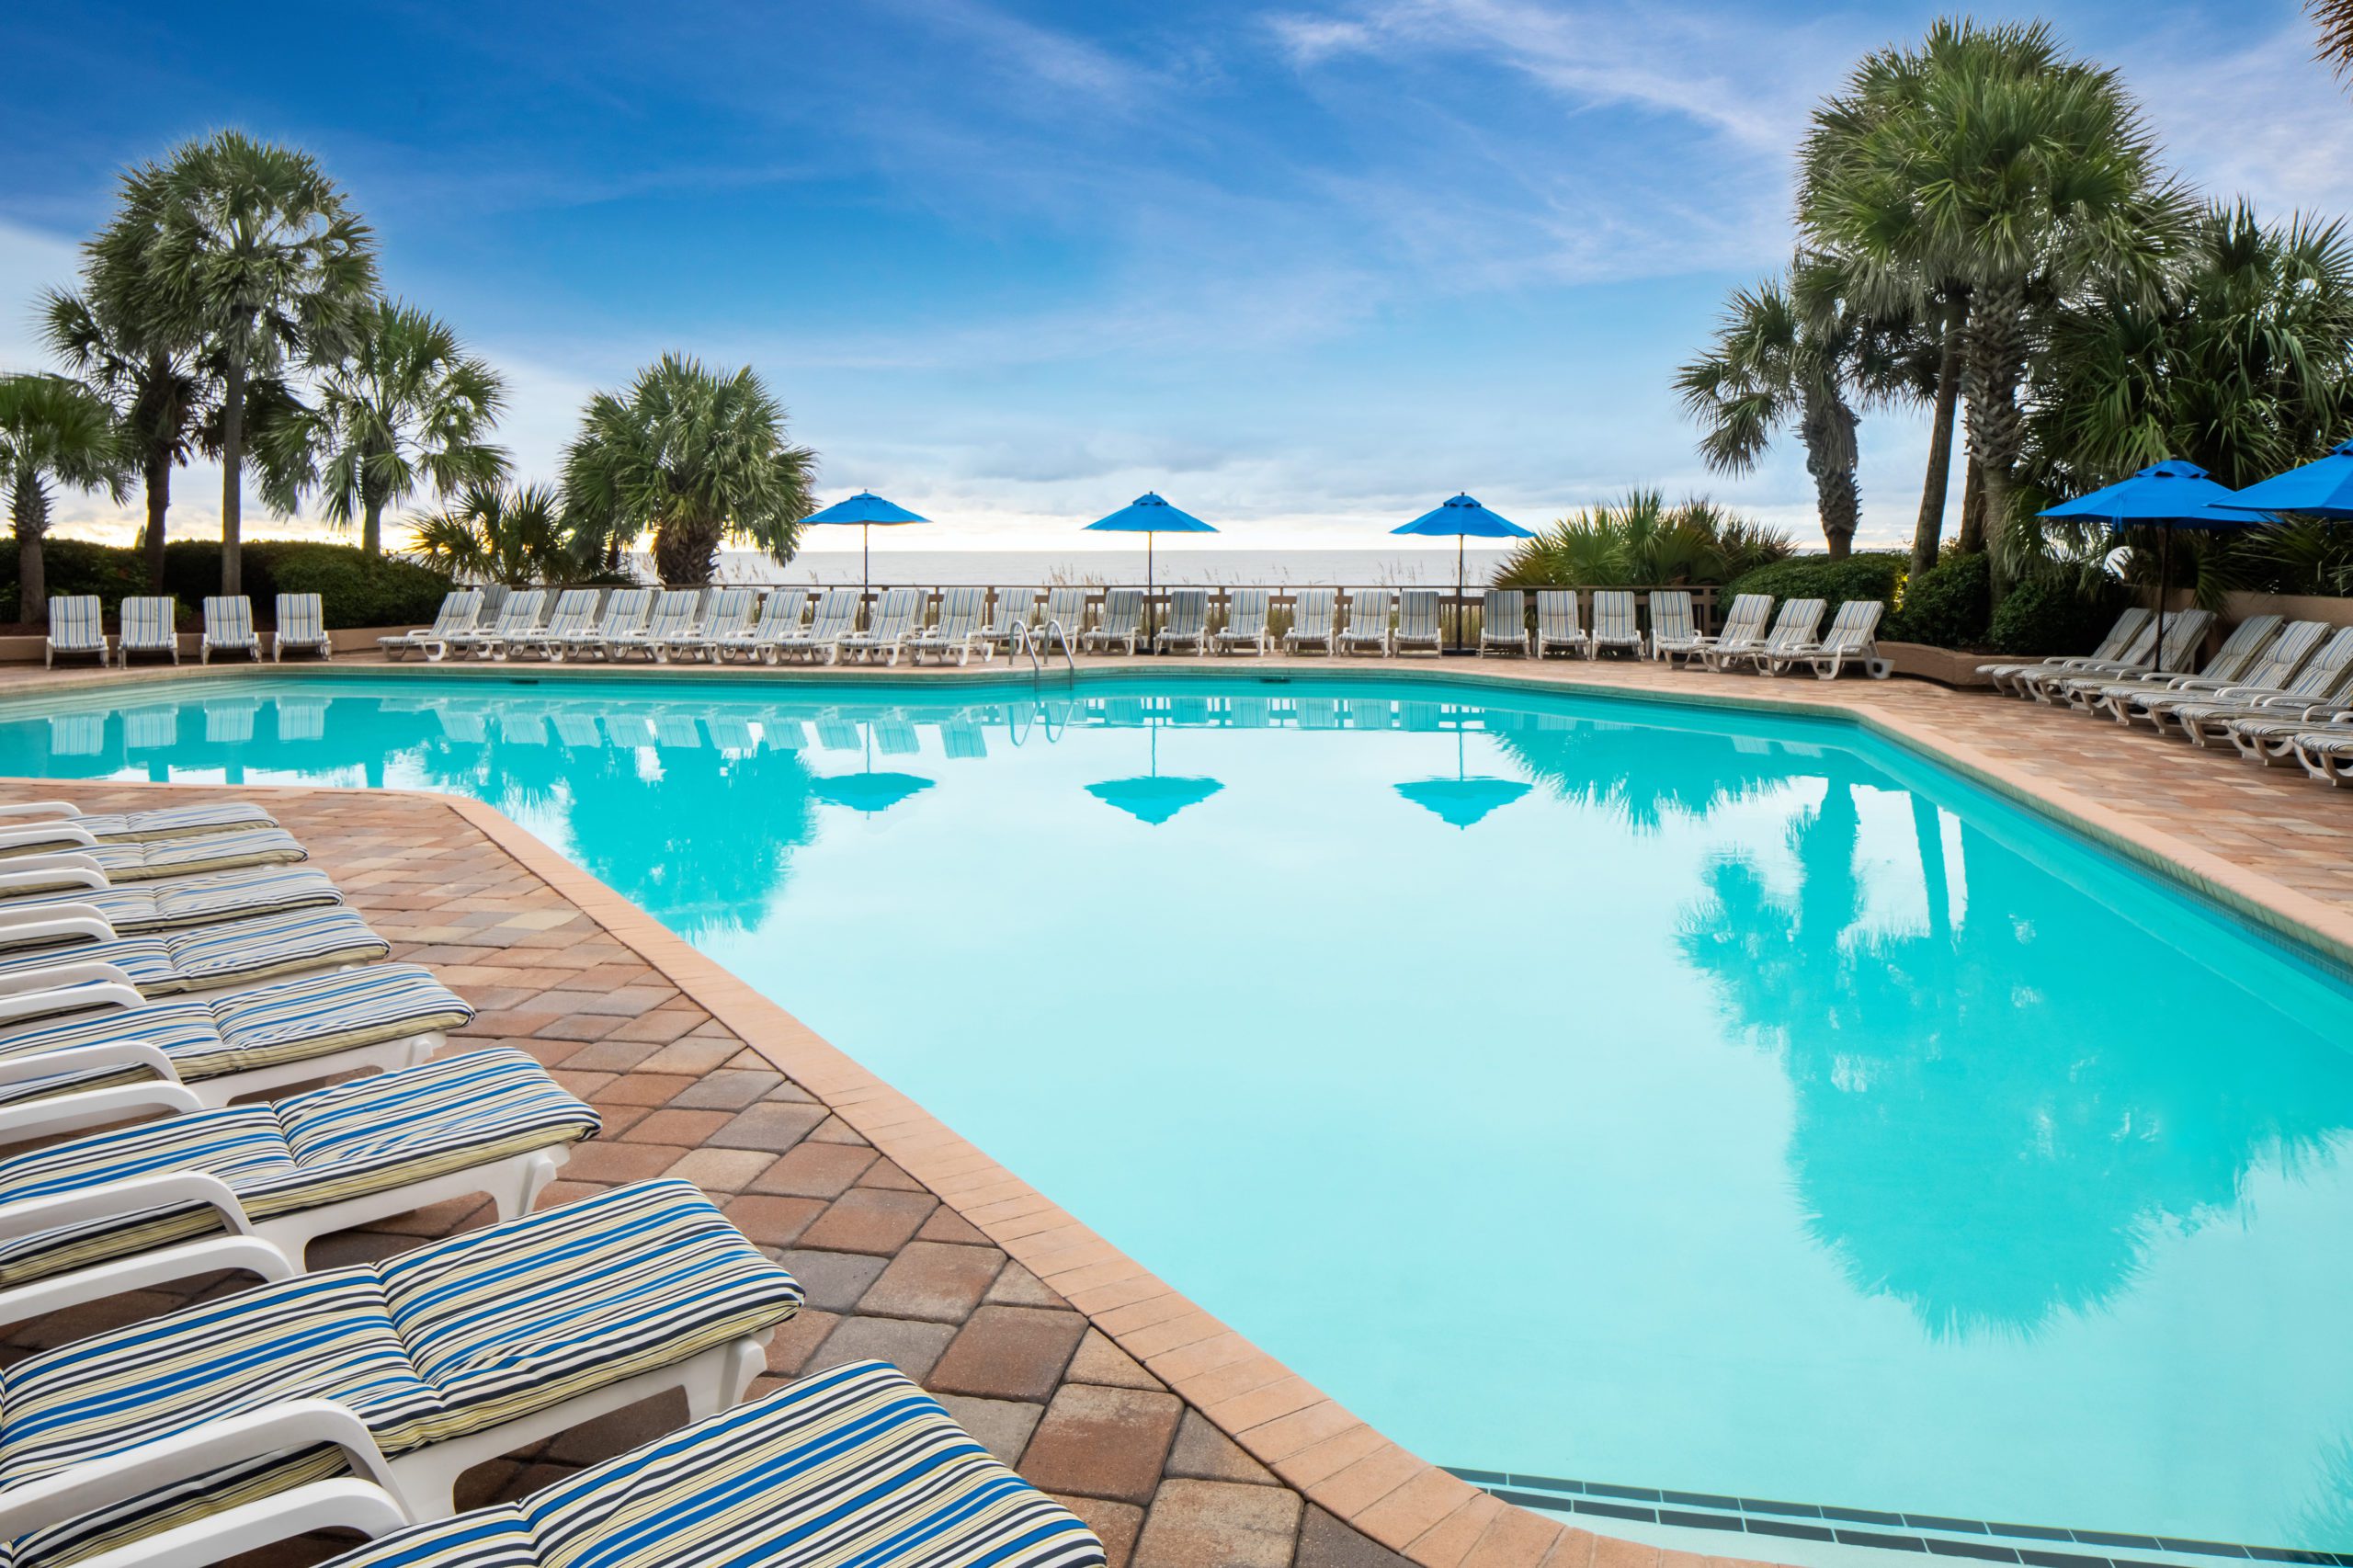 Pools and Spas at Coral Beach Resort pic